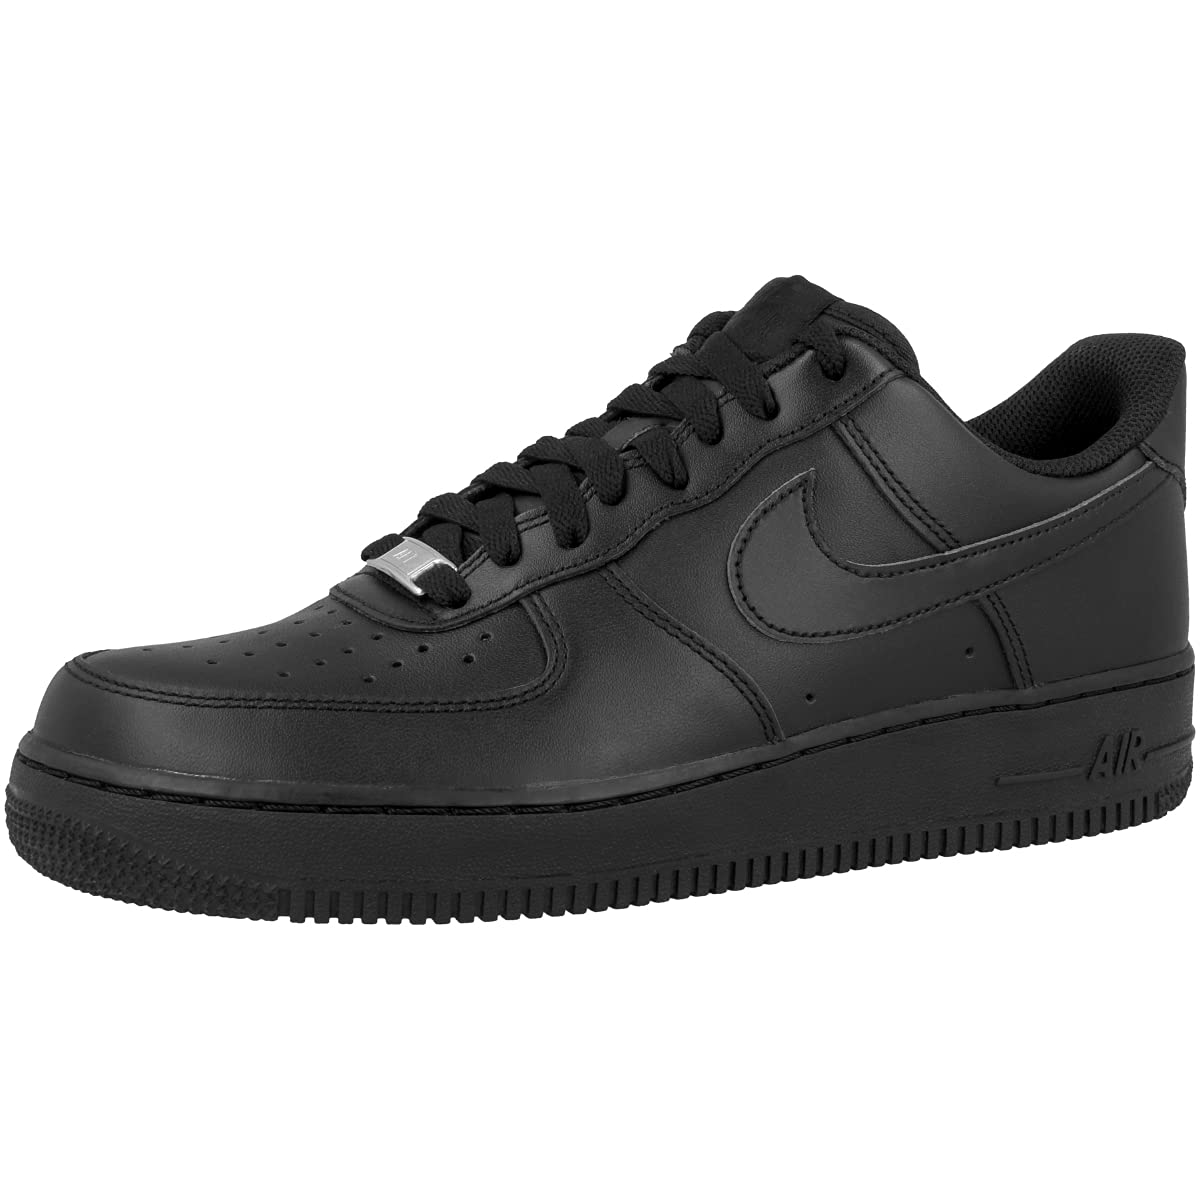 Nike Men's Air Force 1 '07 Shoe, Black/Black-gum-light Brown, 11